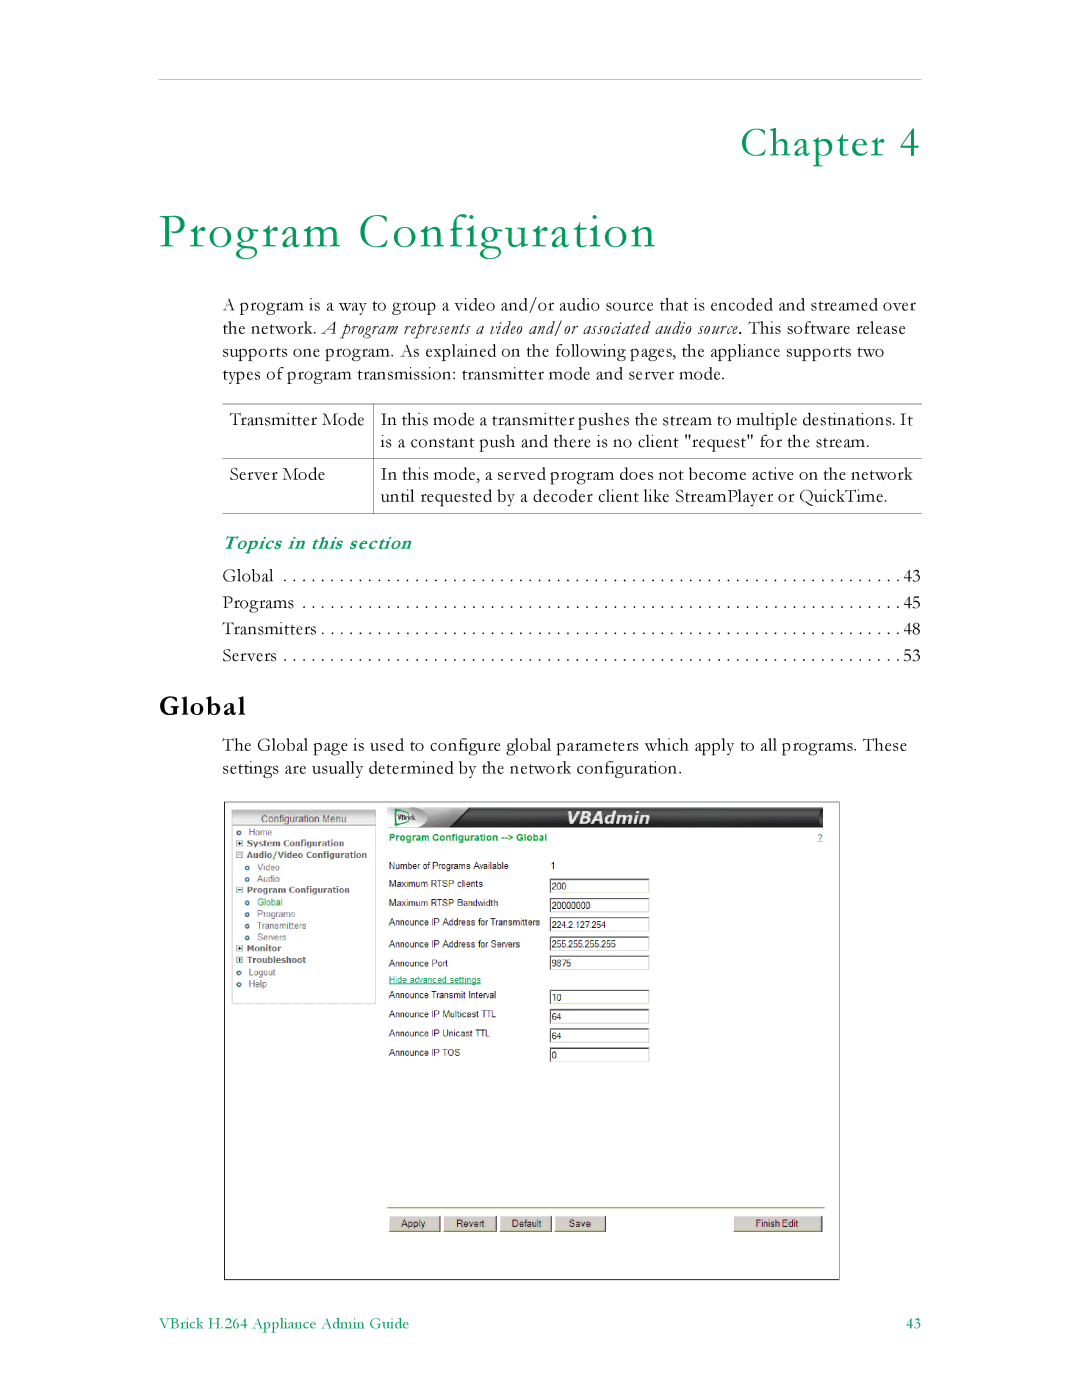 VBrick Systems 7000 manual Program Configuration, Global 